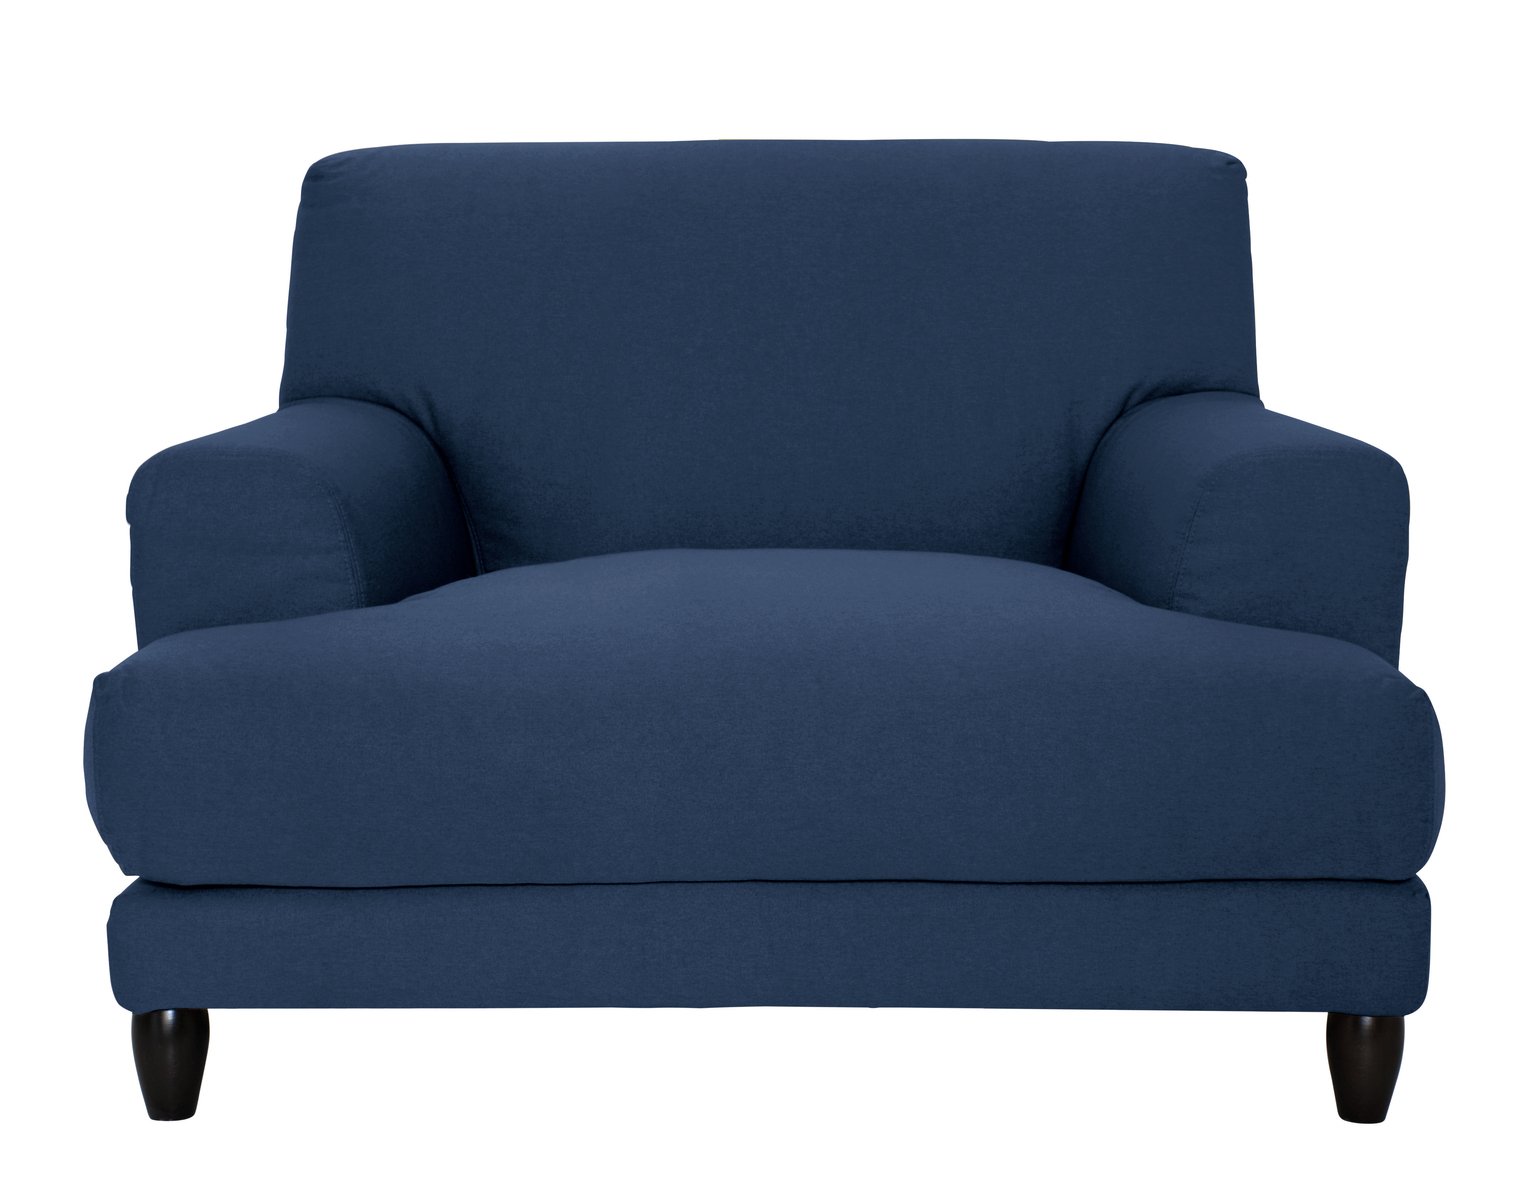 Habitat Askem Fabric Cuddle Chair - Blue